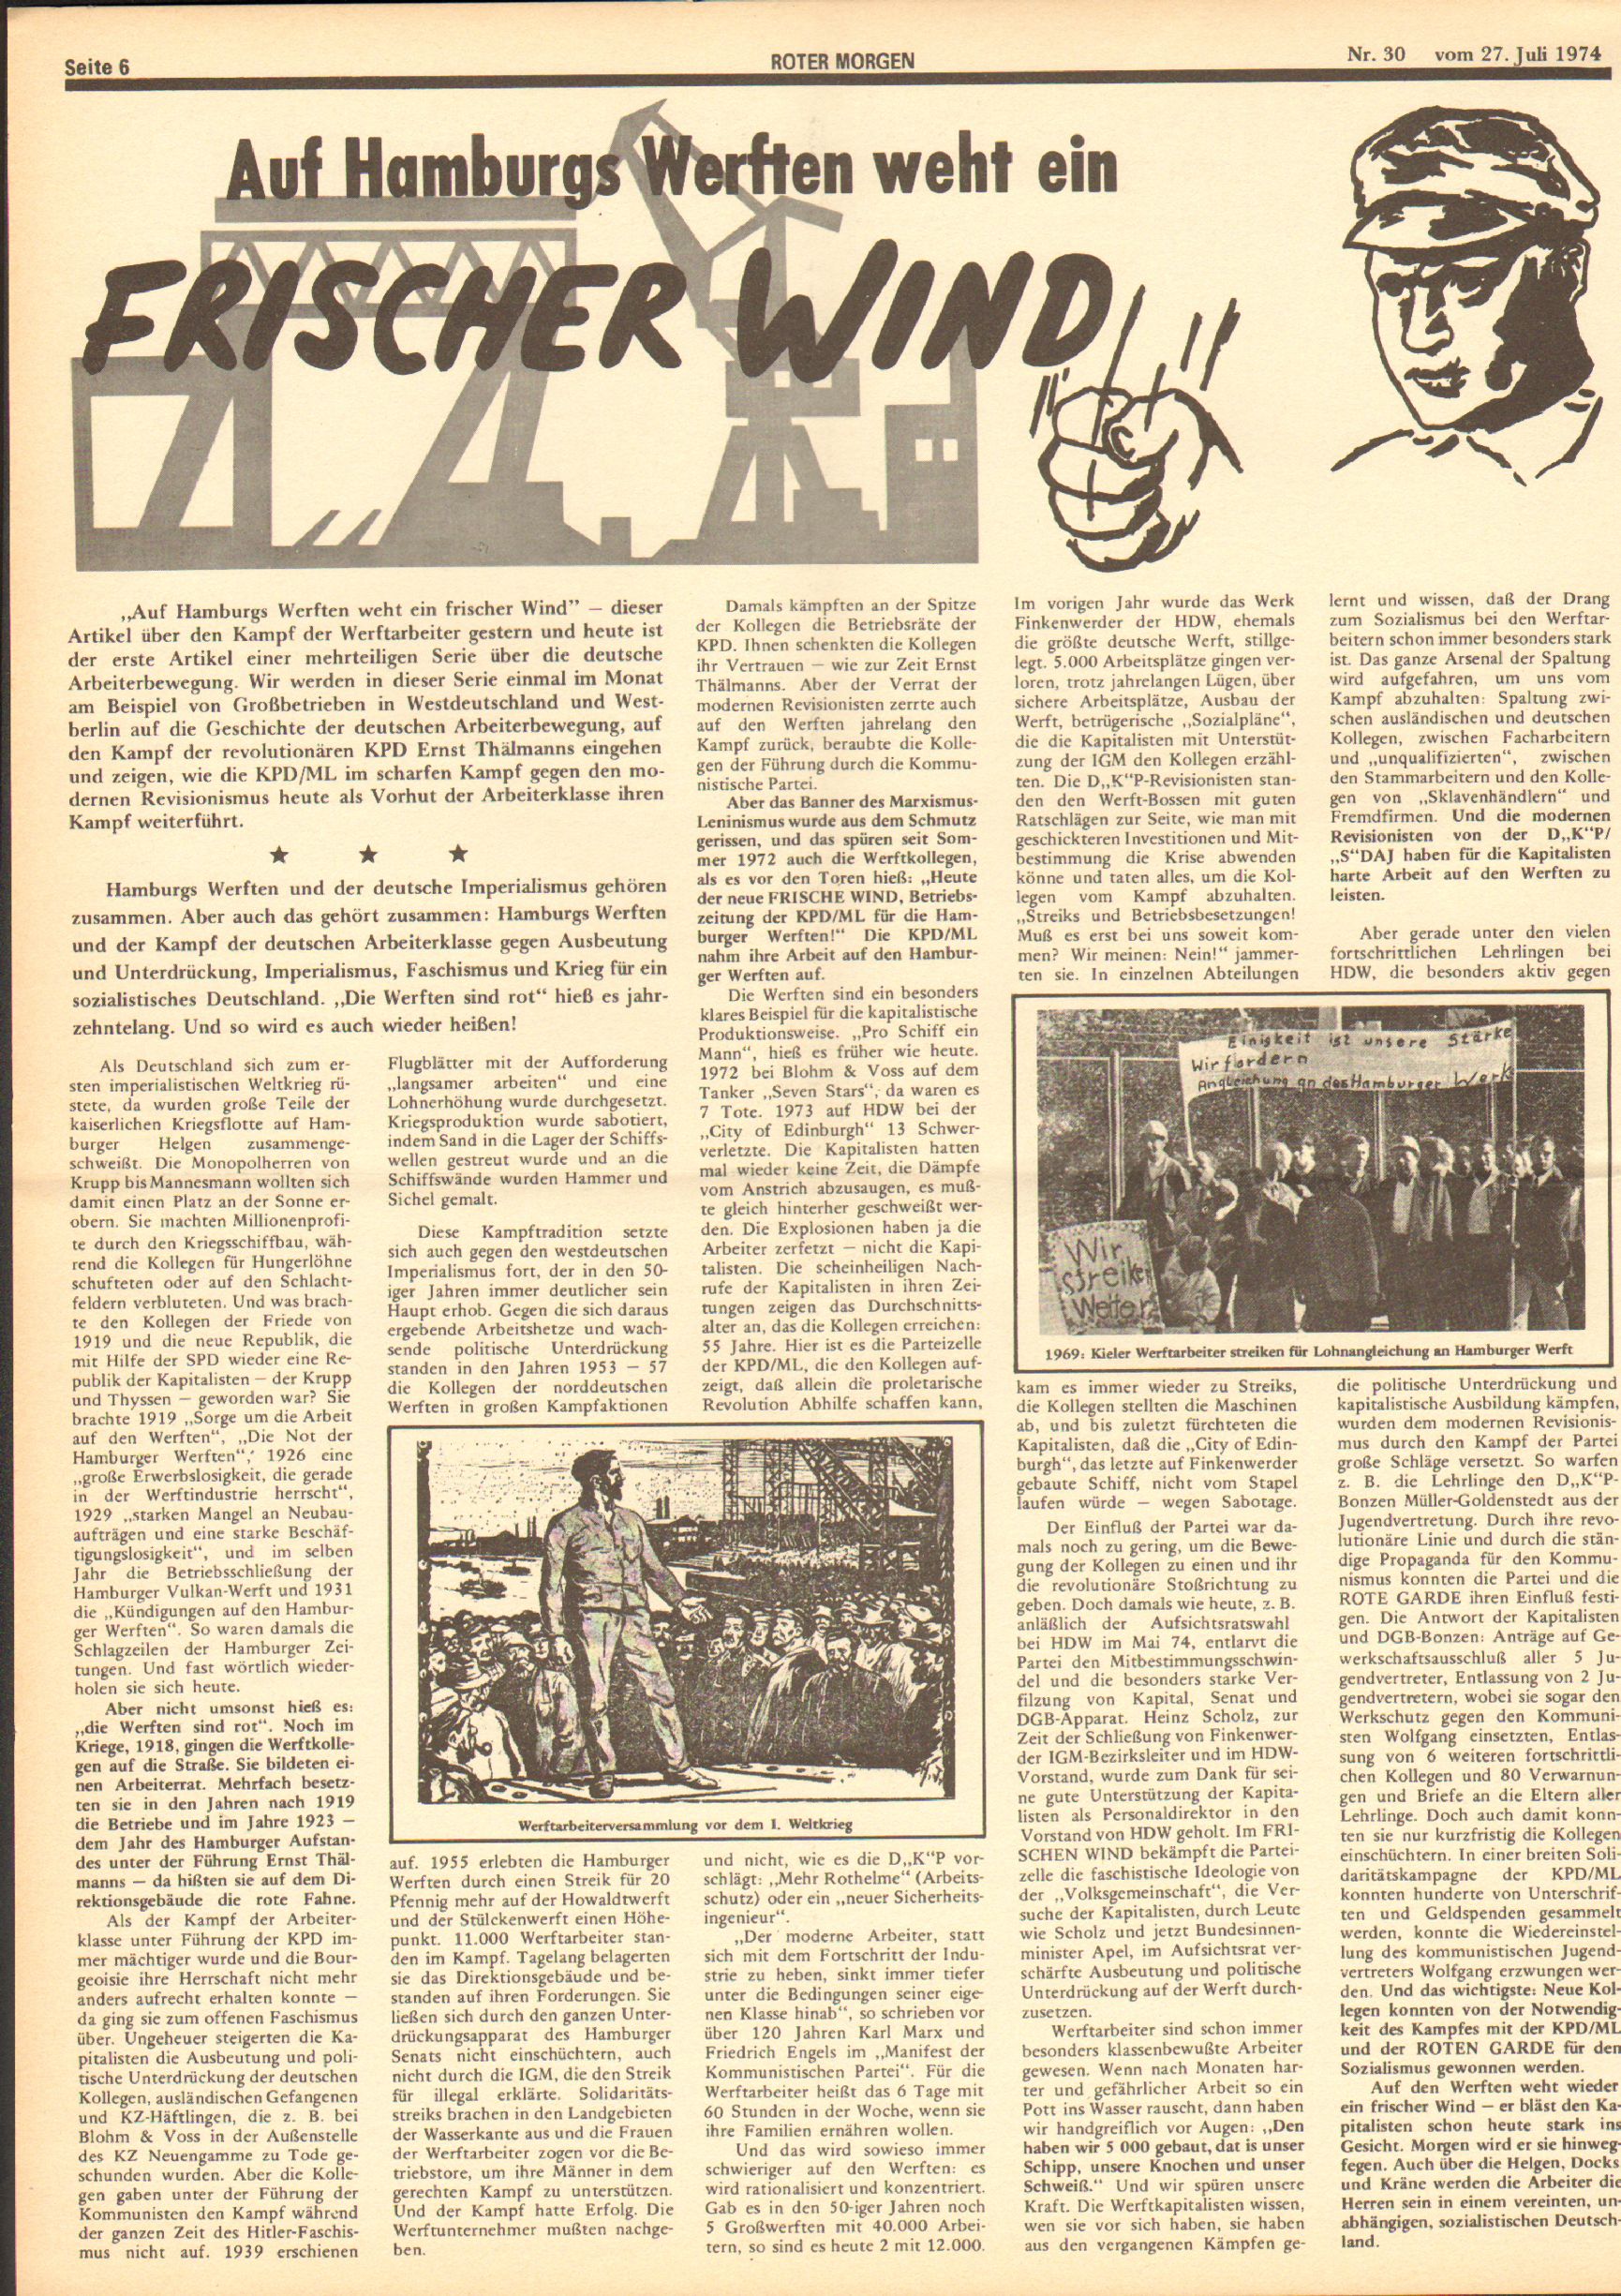 Roter Morgen, 8. Jg., 27. Juli 1974, Nr. 30, Seite 6